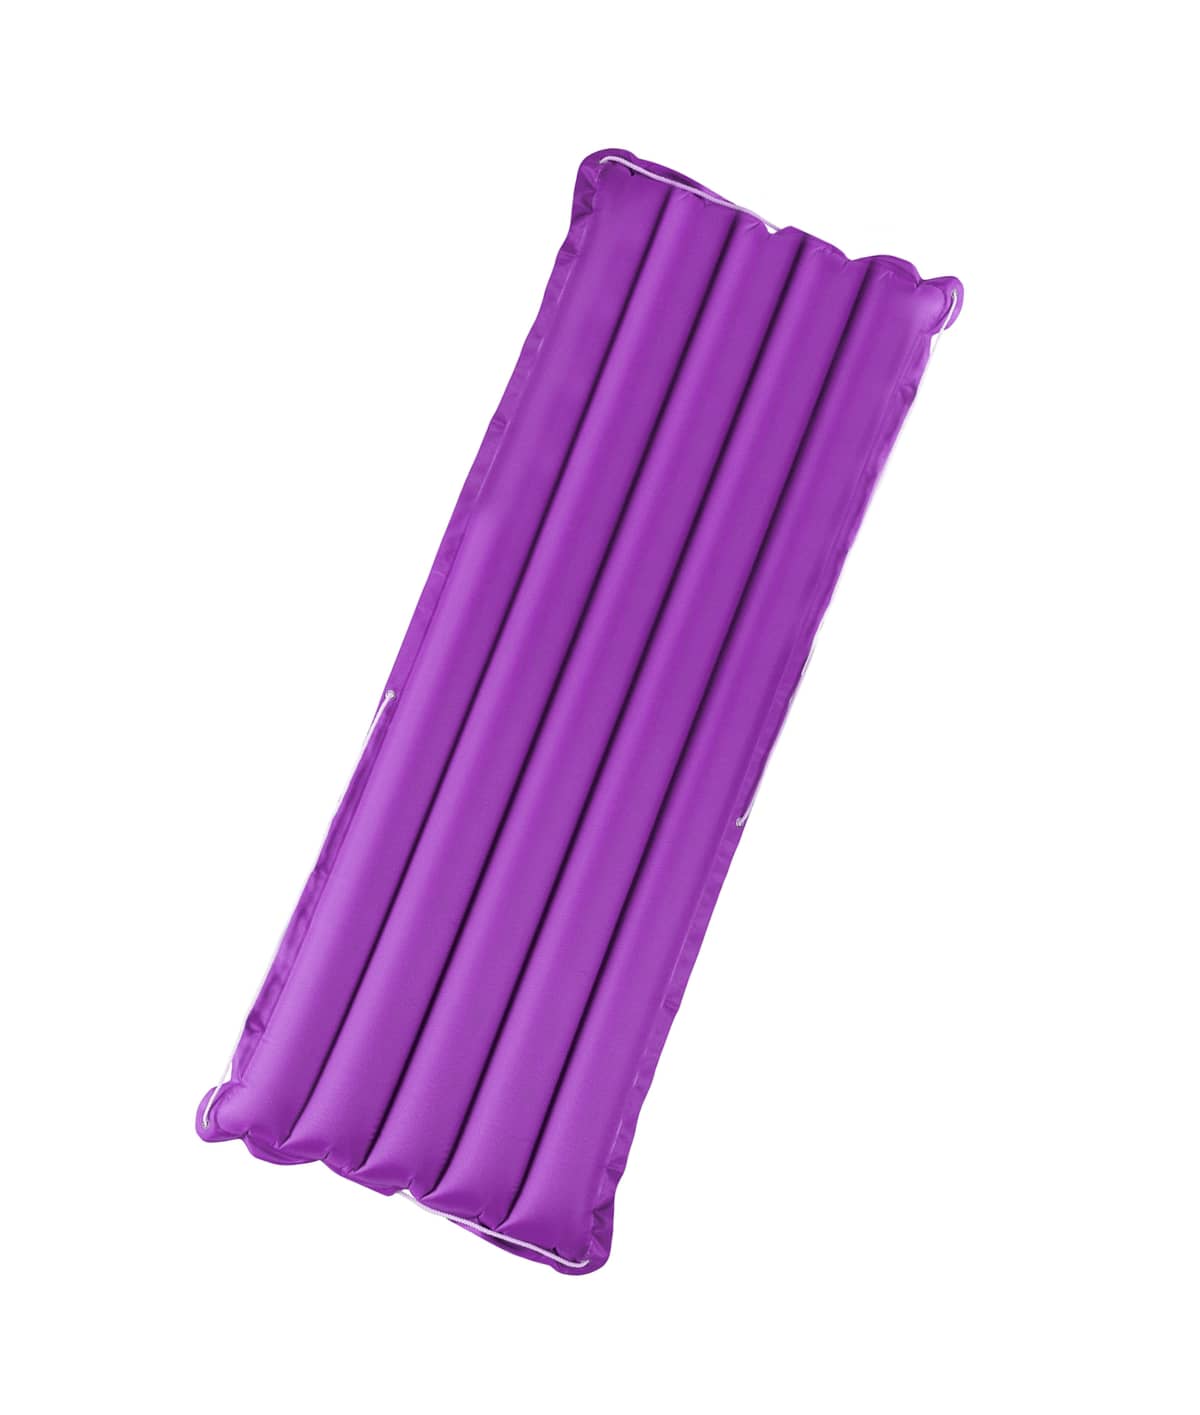 Purple air mattress on a white background